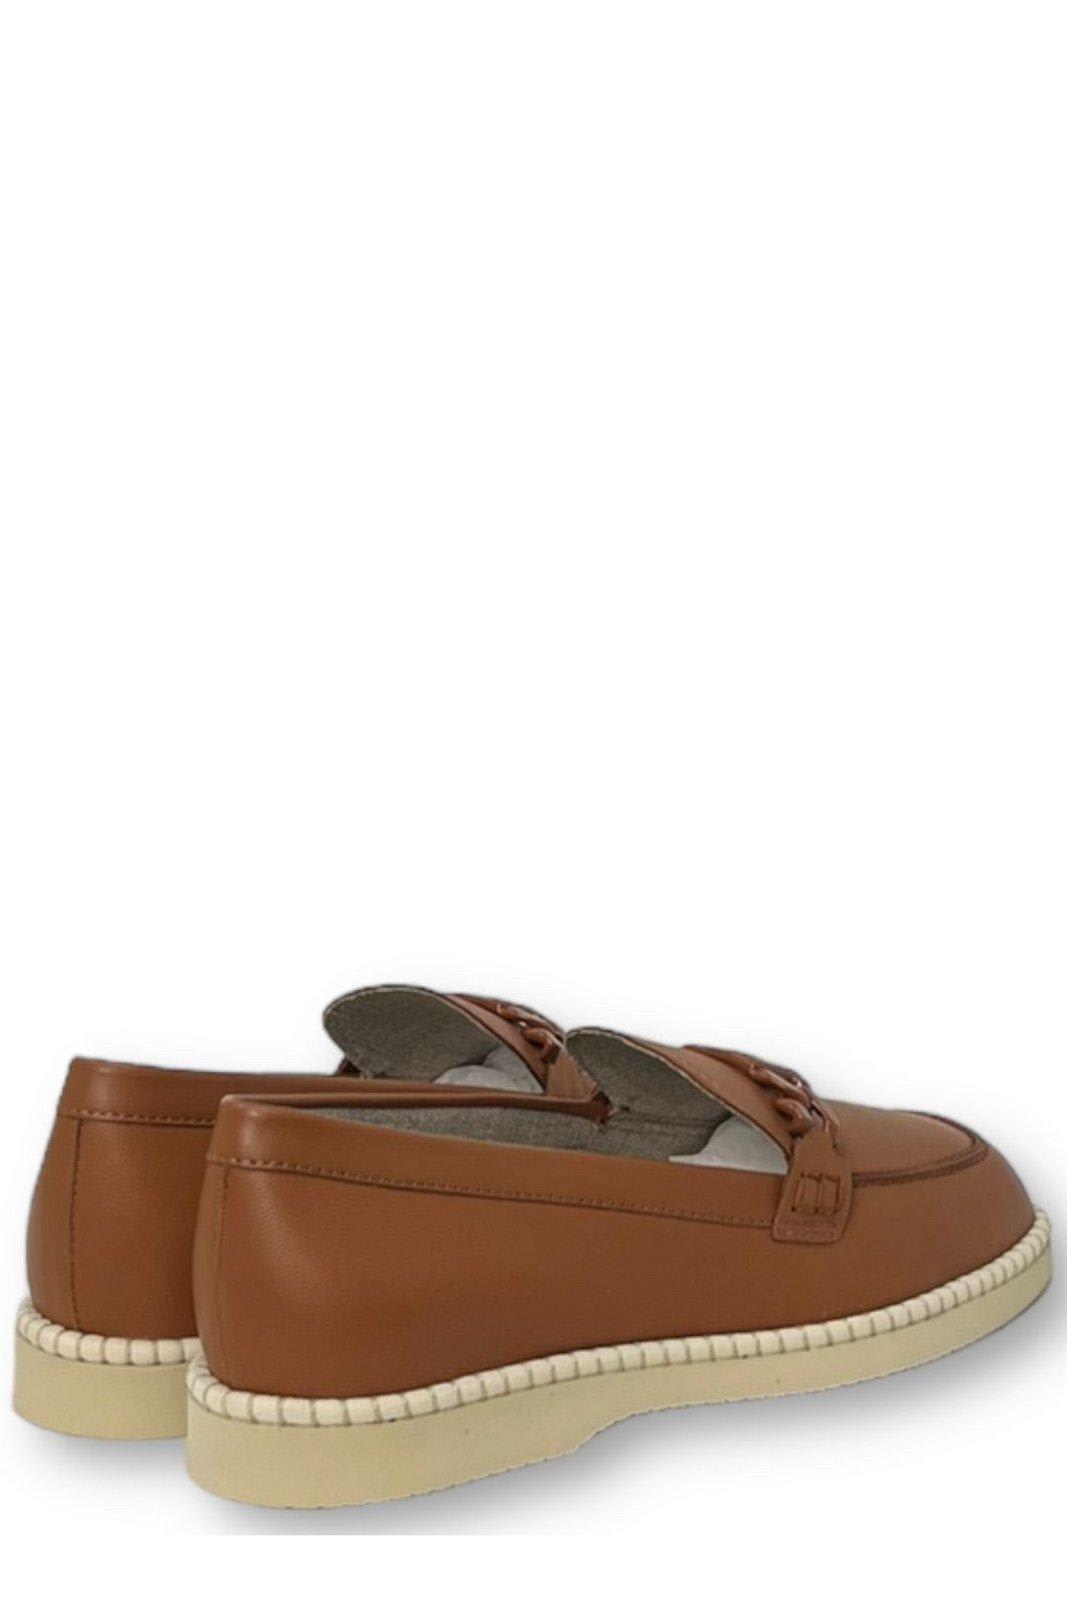 Shop Hogan H660 Slip-on Sandals